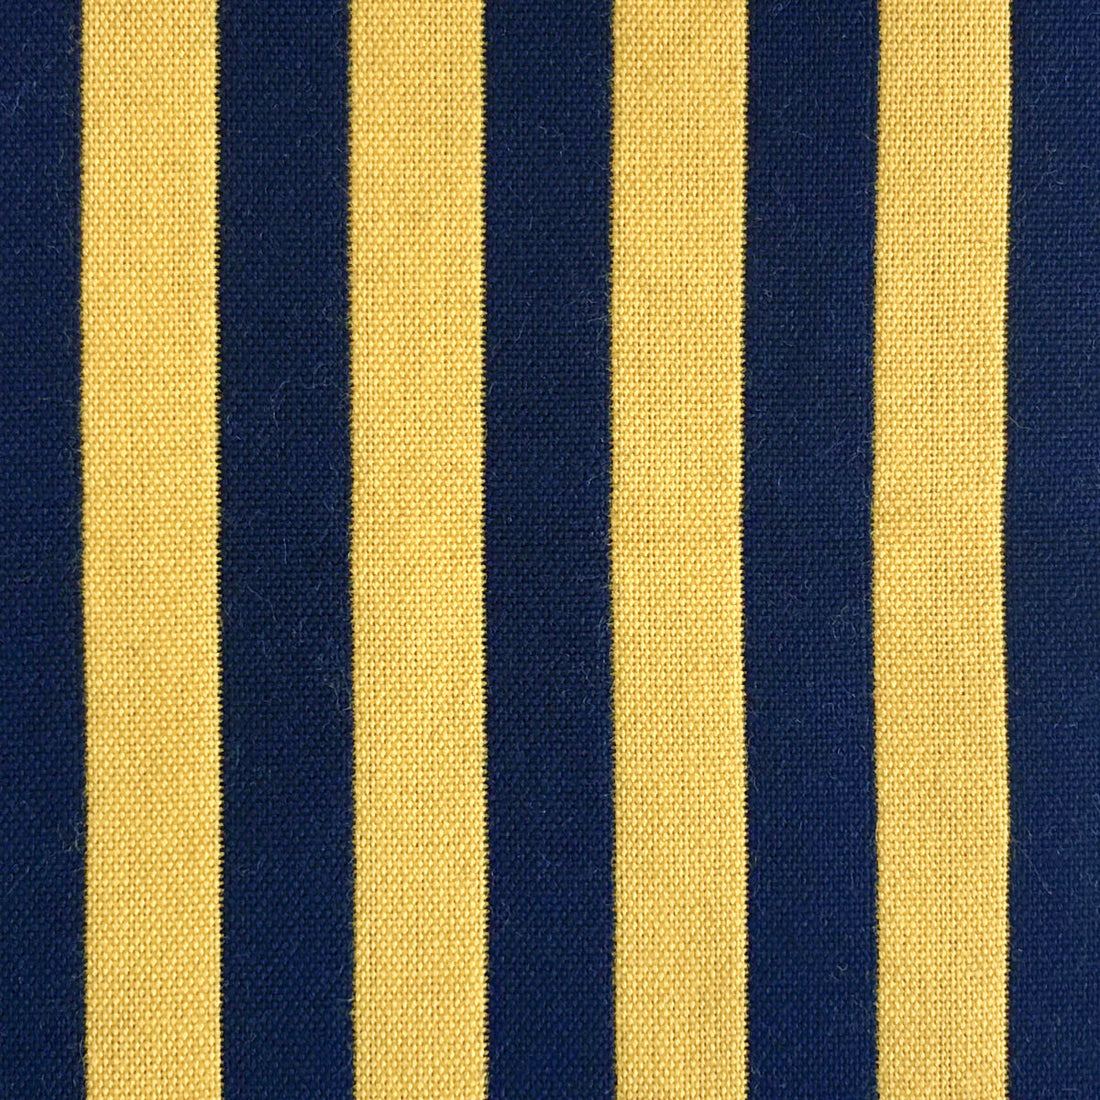 Benjamin fabric in amarillo/navy color - pattern LCT1057.004.0 - by Gaston y Daniela in the Lorenzo Castillo VI collection